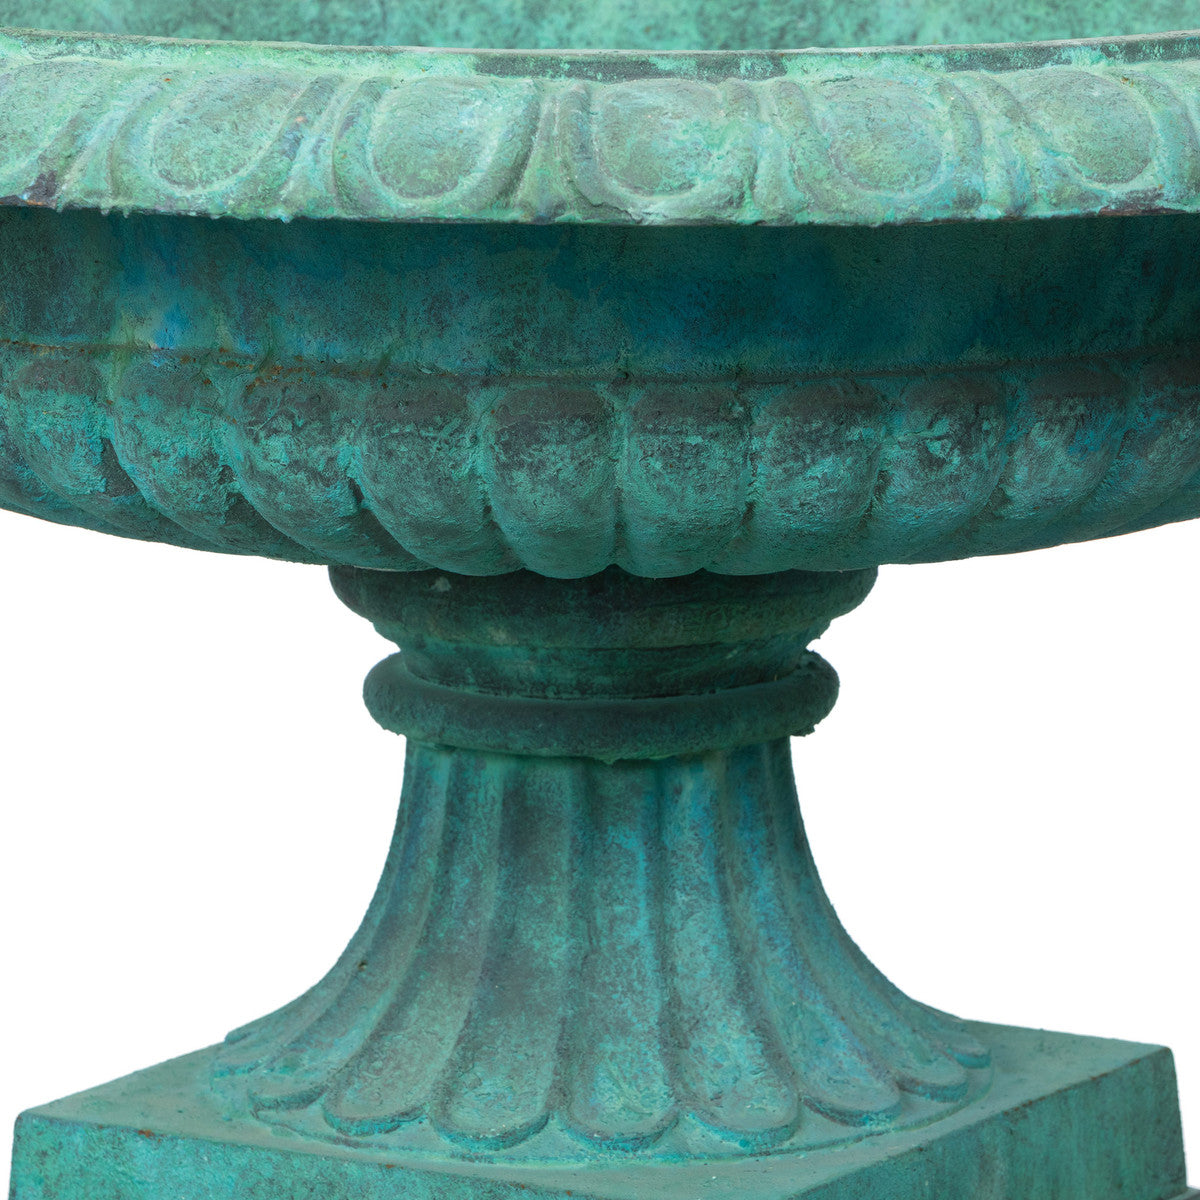 Cast Iron Estate Urn with Pedestal